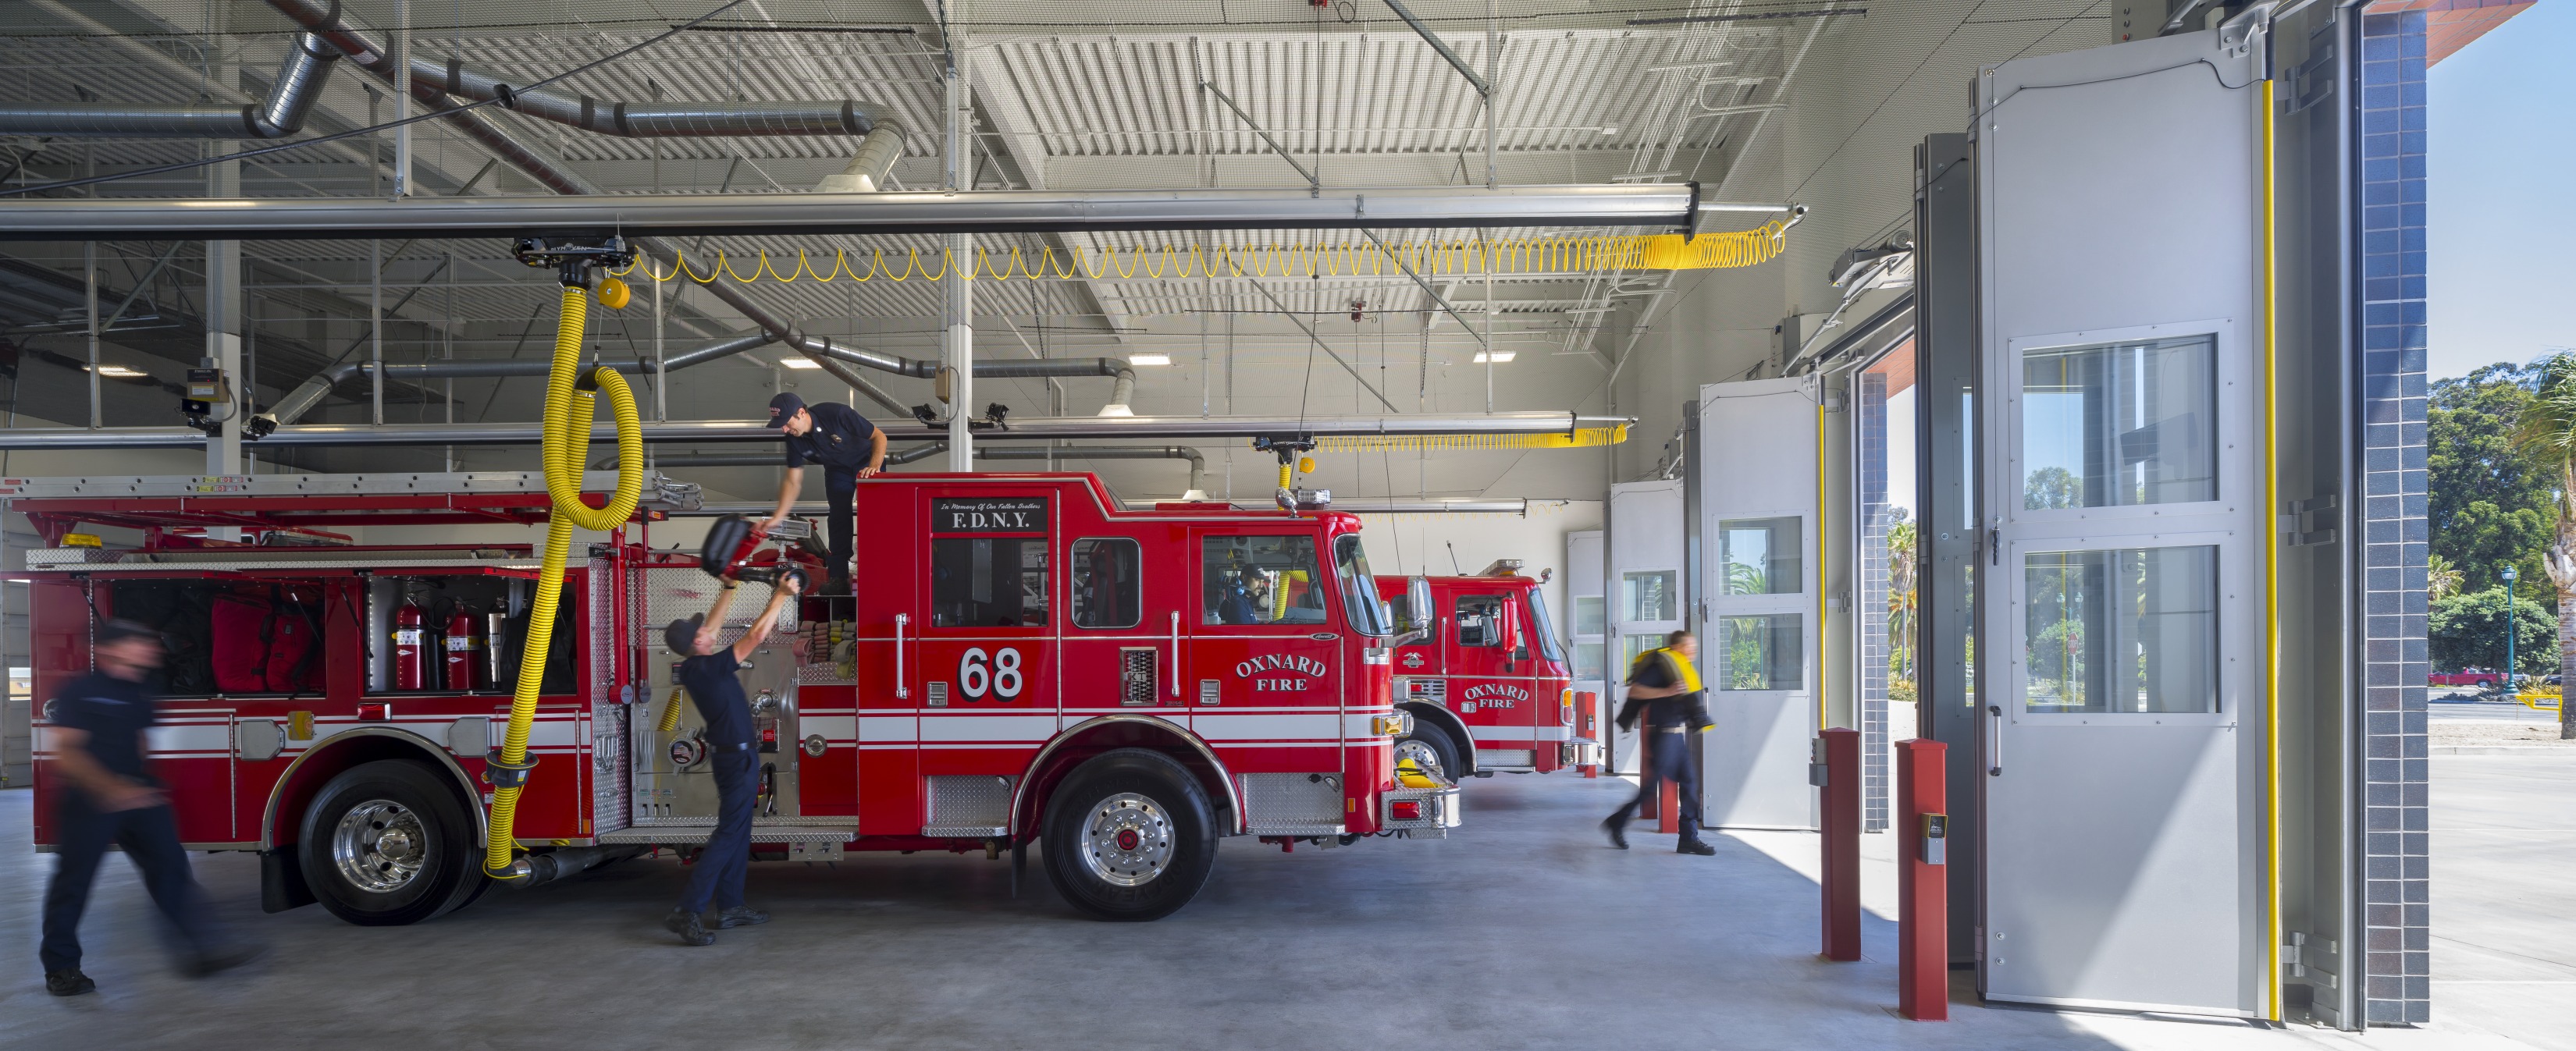 Architectural design consultants modernized Oxnard Fire Station No. 8.